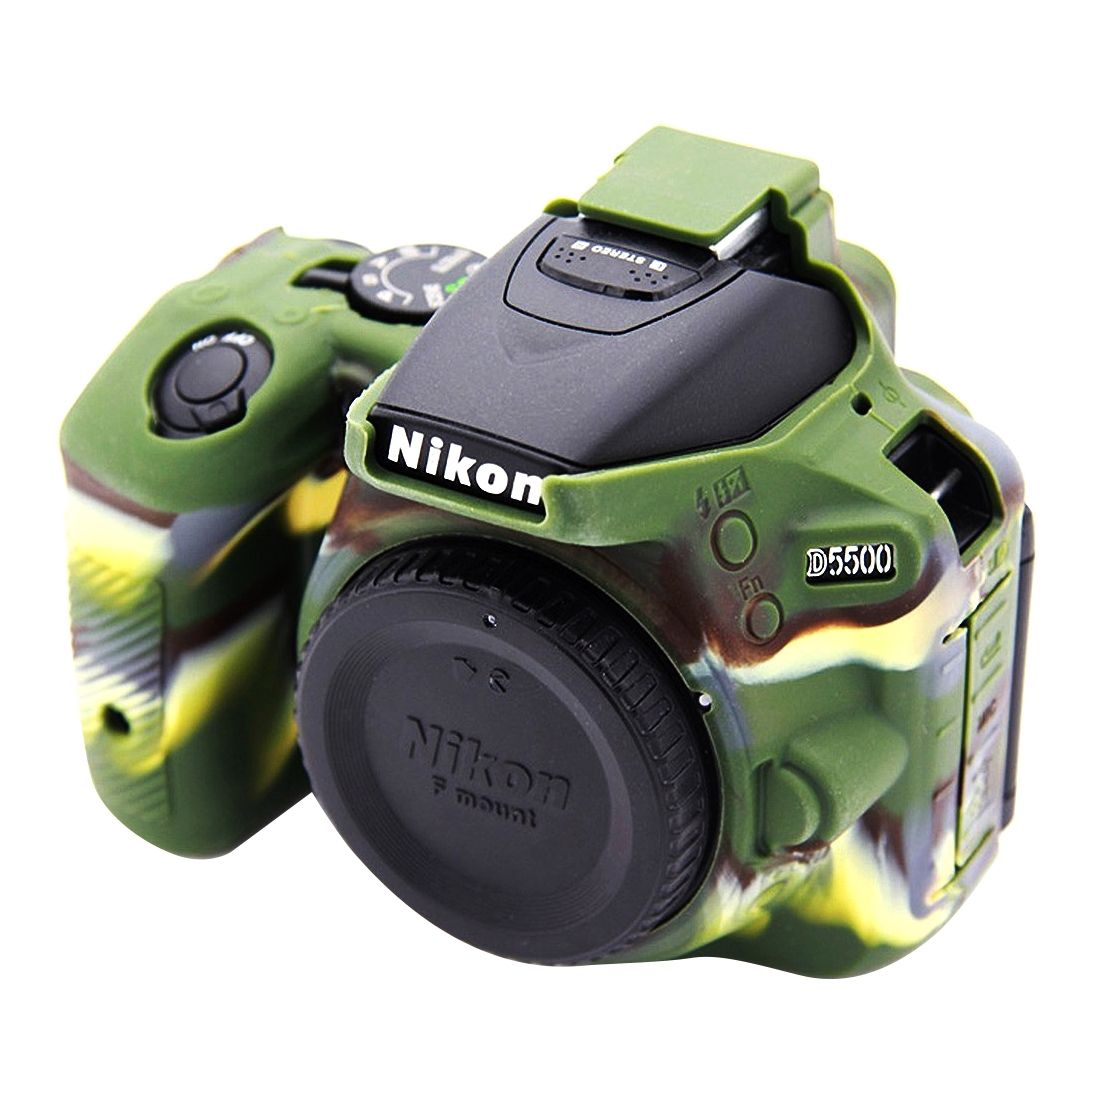 PULUZ-PU7114-Soft-Silicone-Protective-Case-for-Nikon-D5500-D5600-DSLR-Camera-1242024